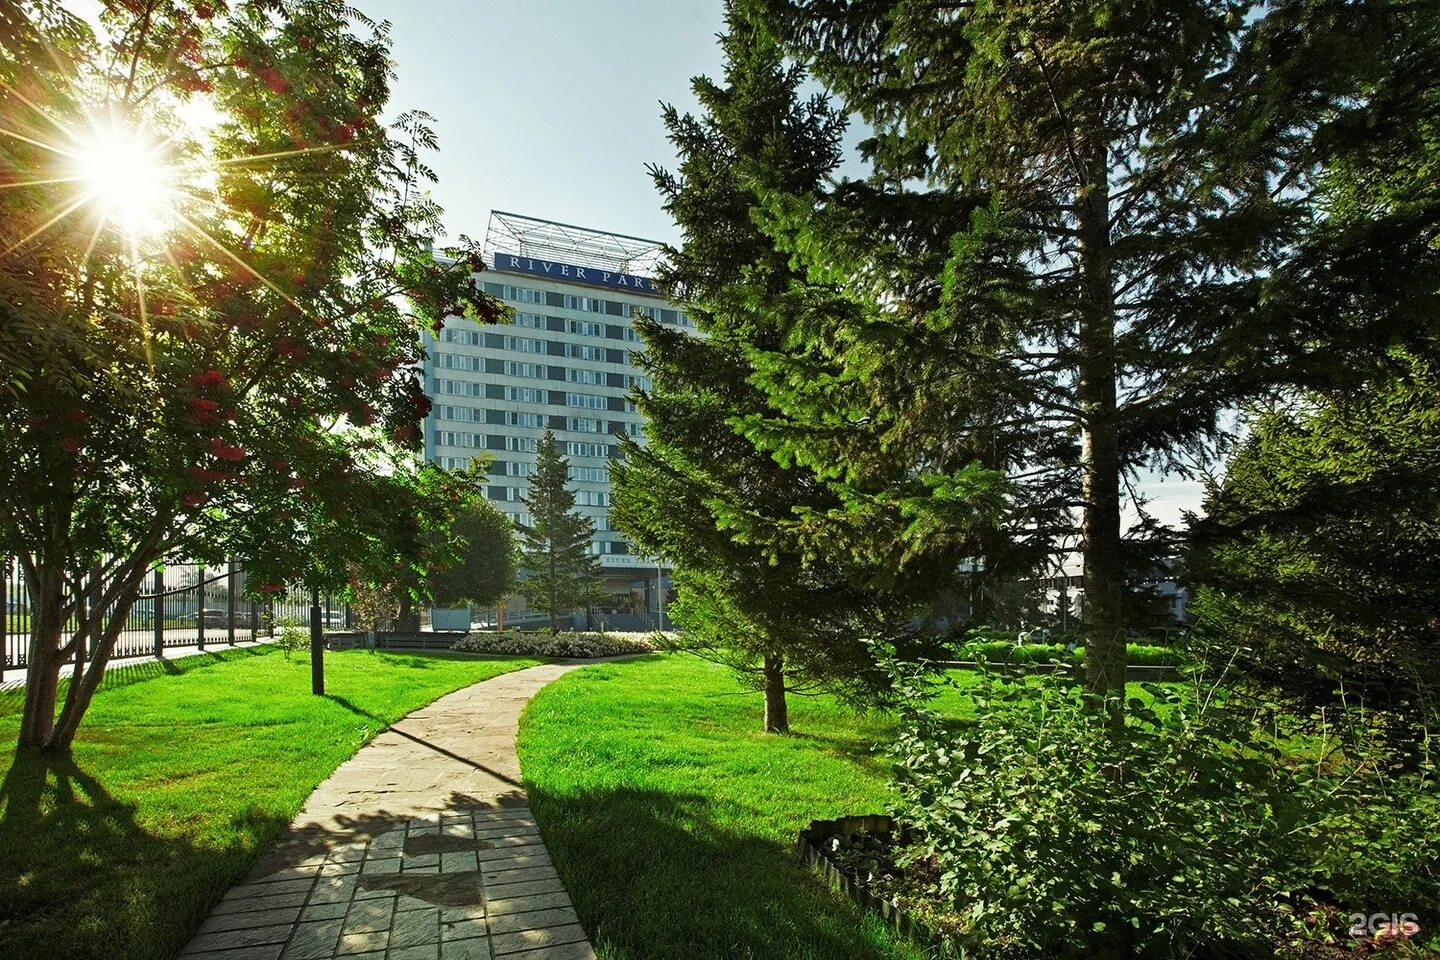 Сайт ривер парк новосибирск. River Park Новосибирск. Отель Ривер парк Новосибирск. Ривьера парк Новосибирск. River Park отель Новосибирск фото.